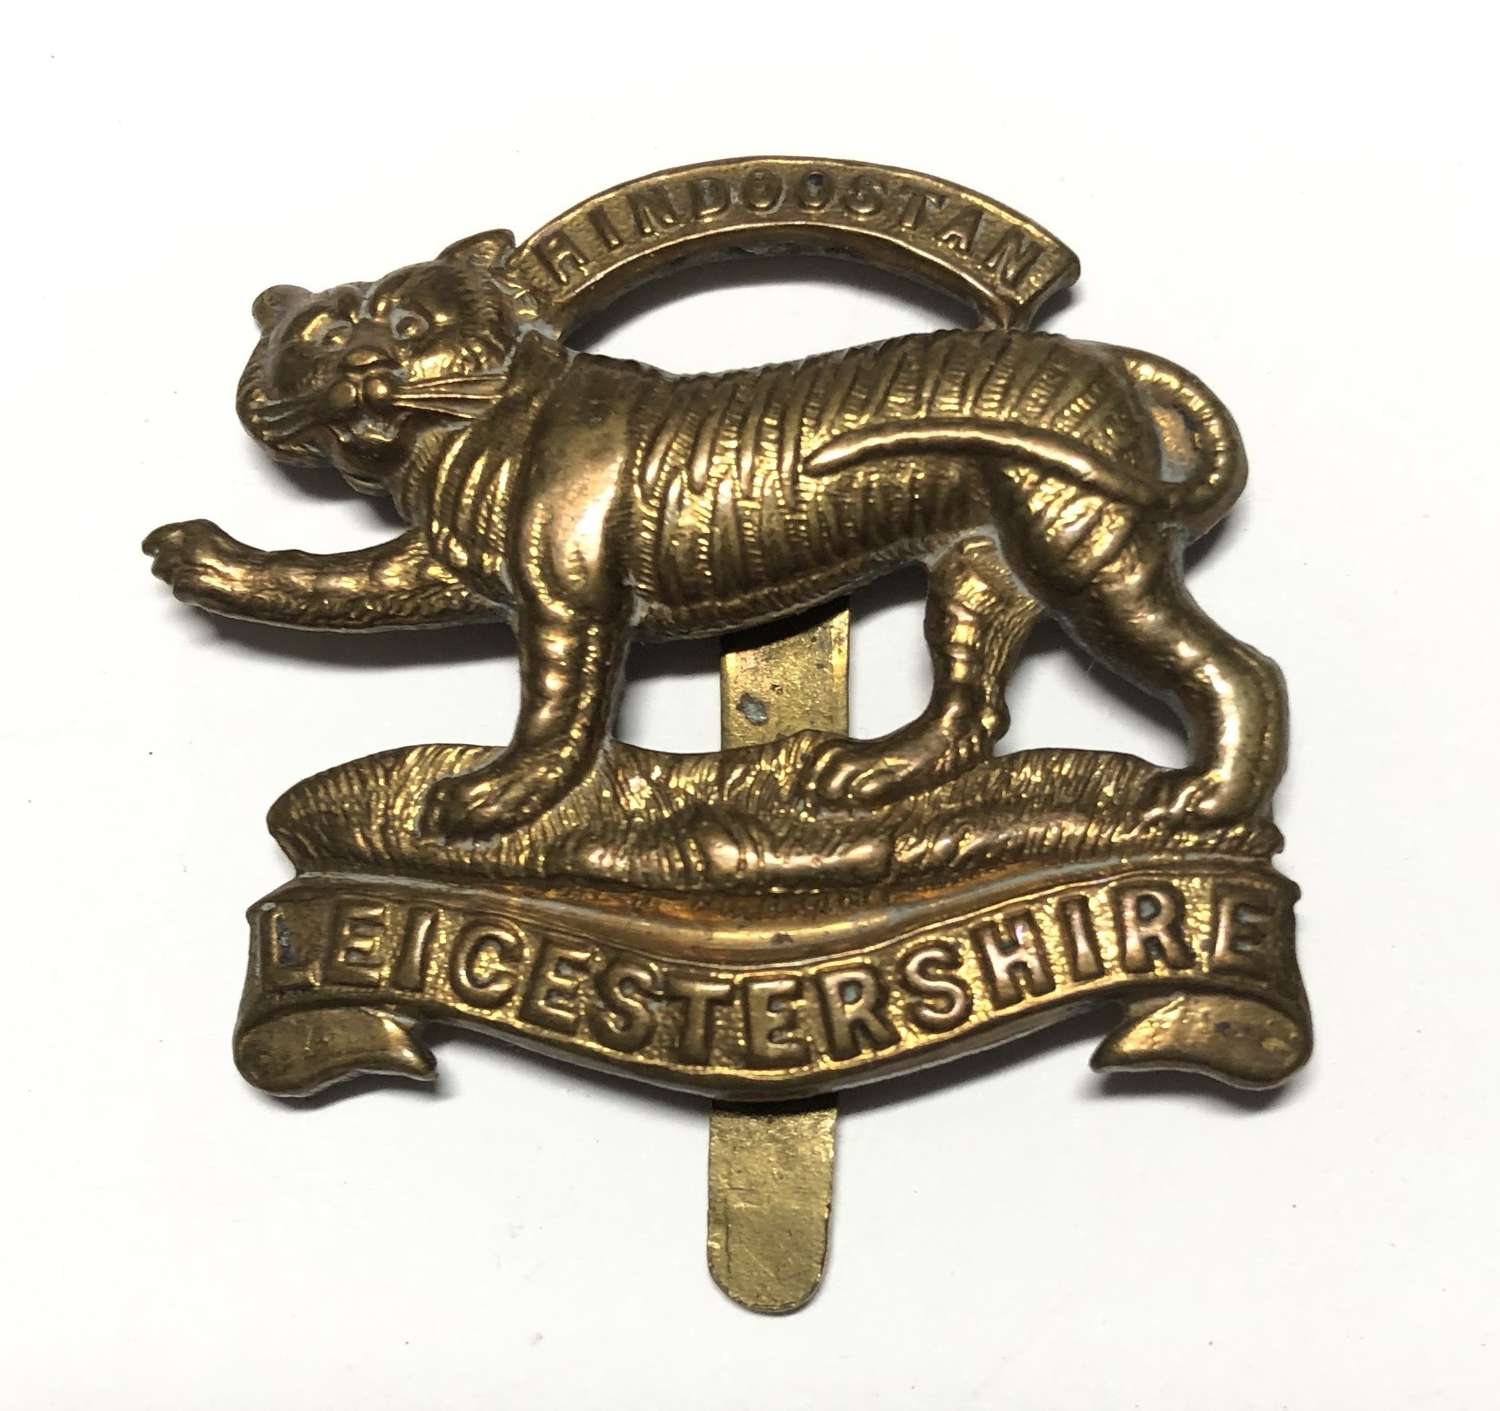 Leicestershire Regiment all brass economy WW1 cap badge c1916-18